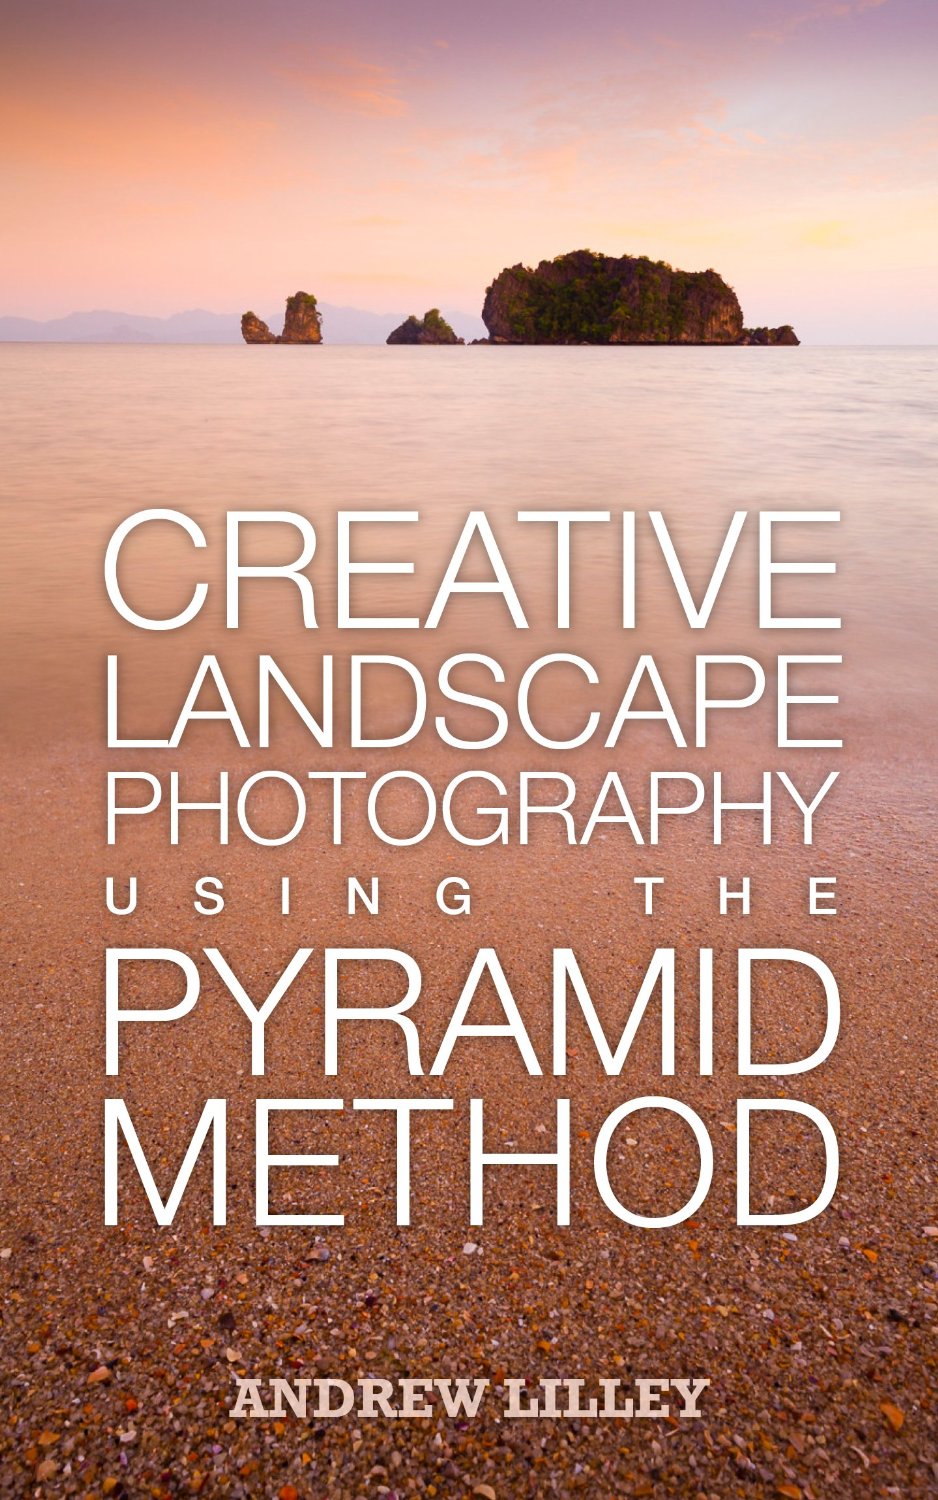 Creative Landscape Photography Using The Pyramid Method